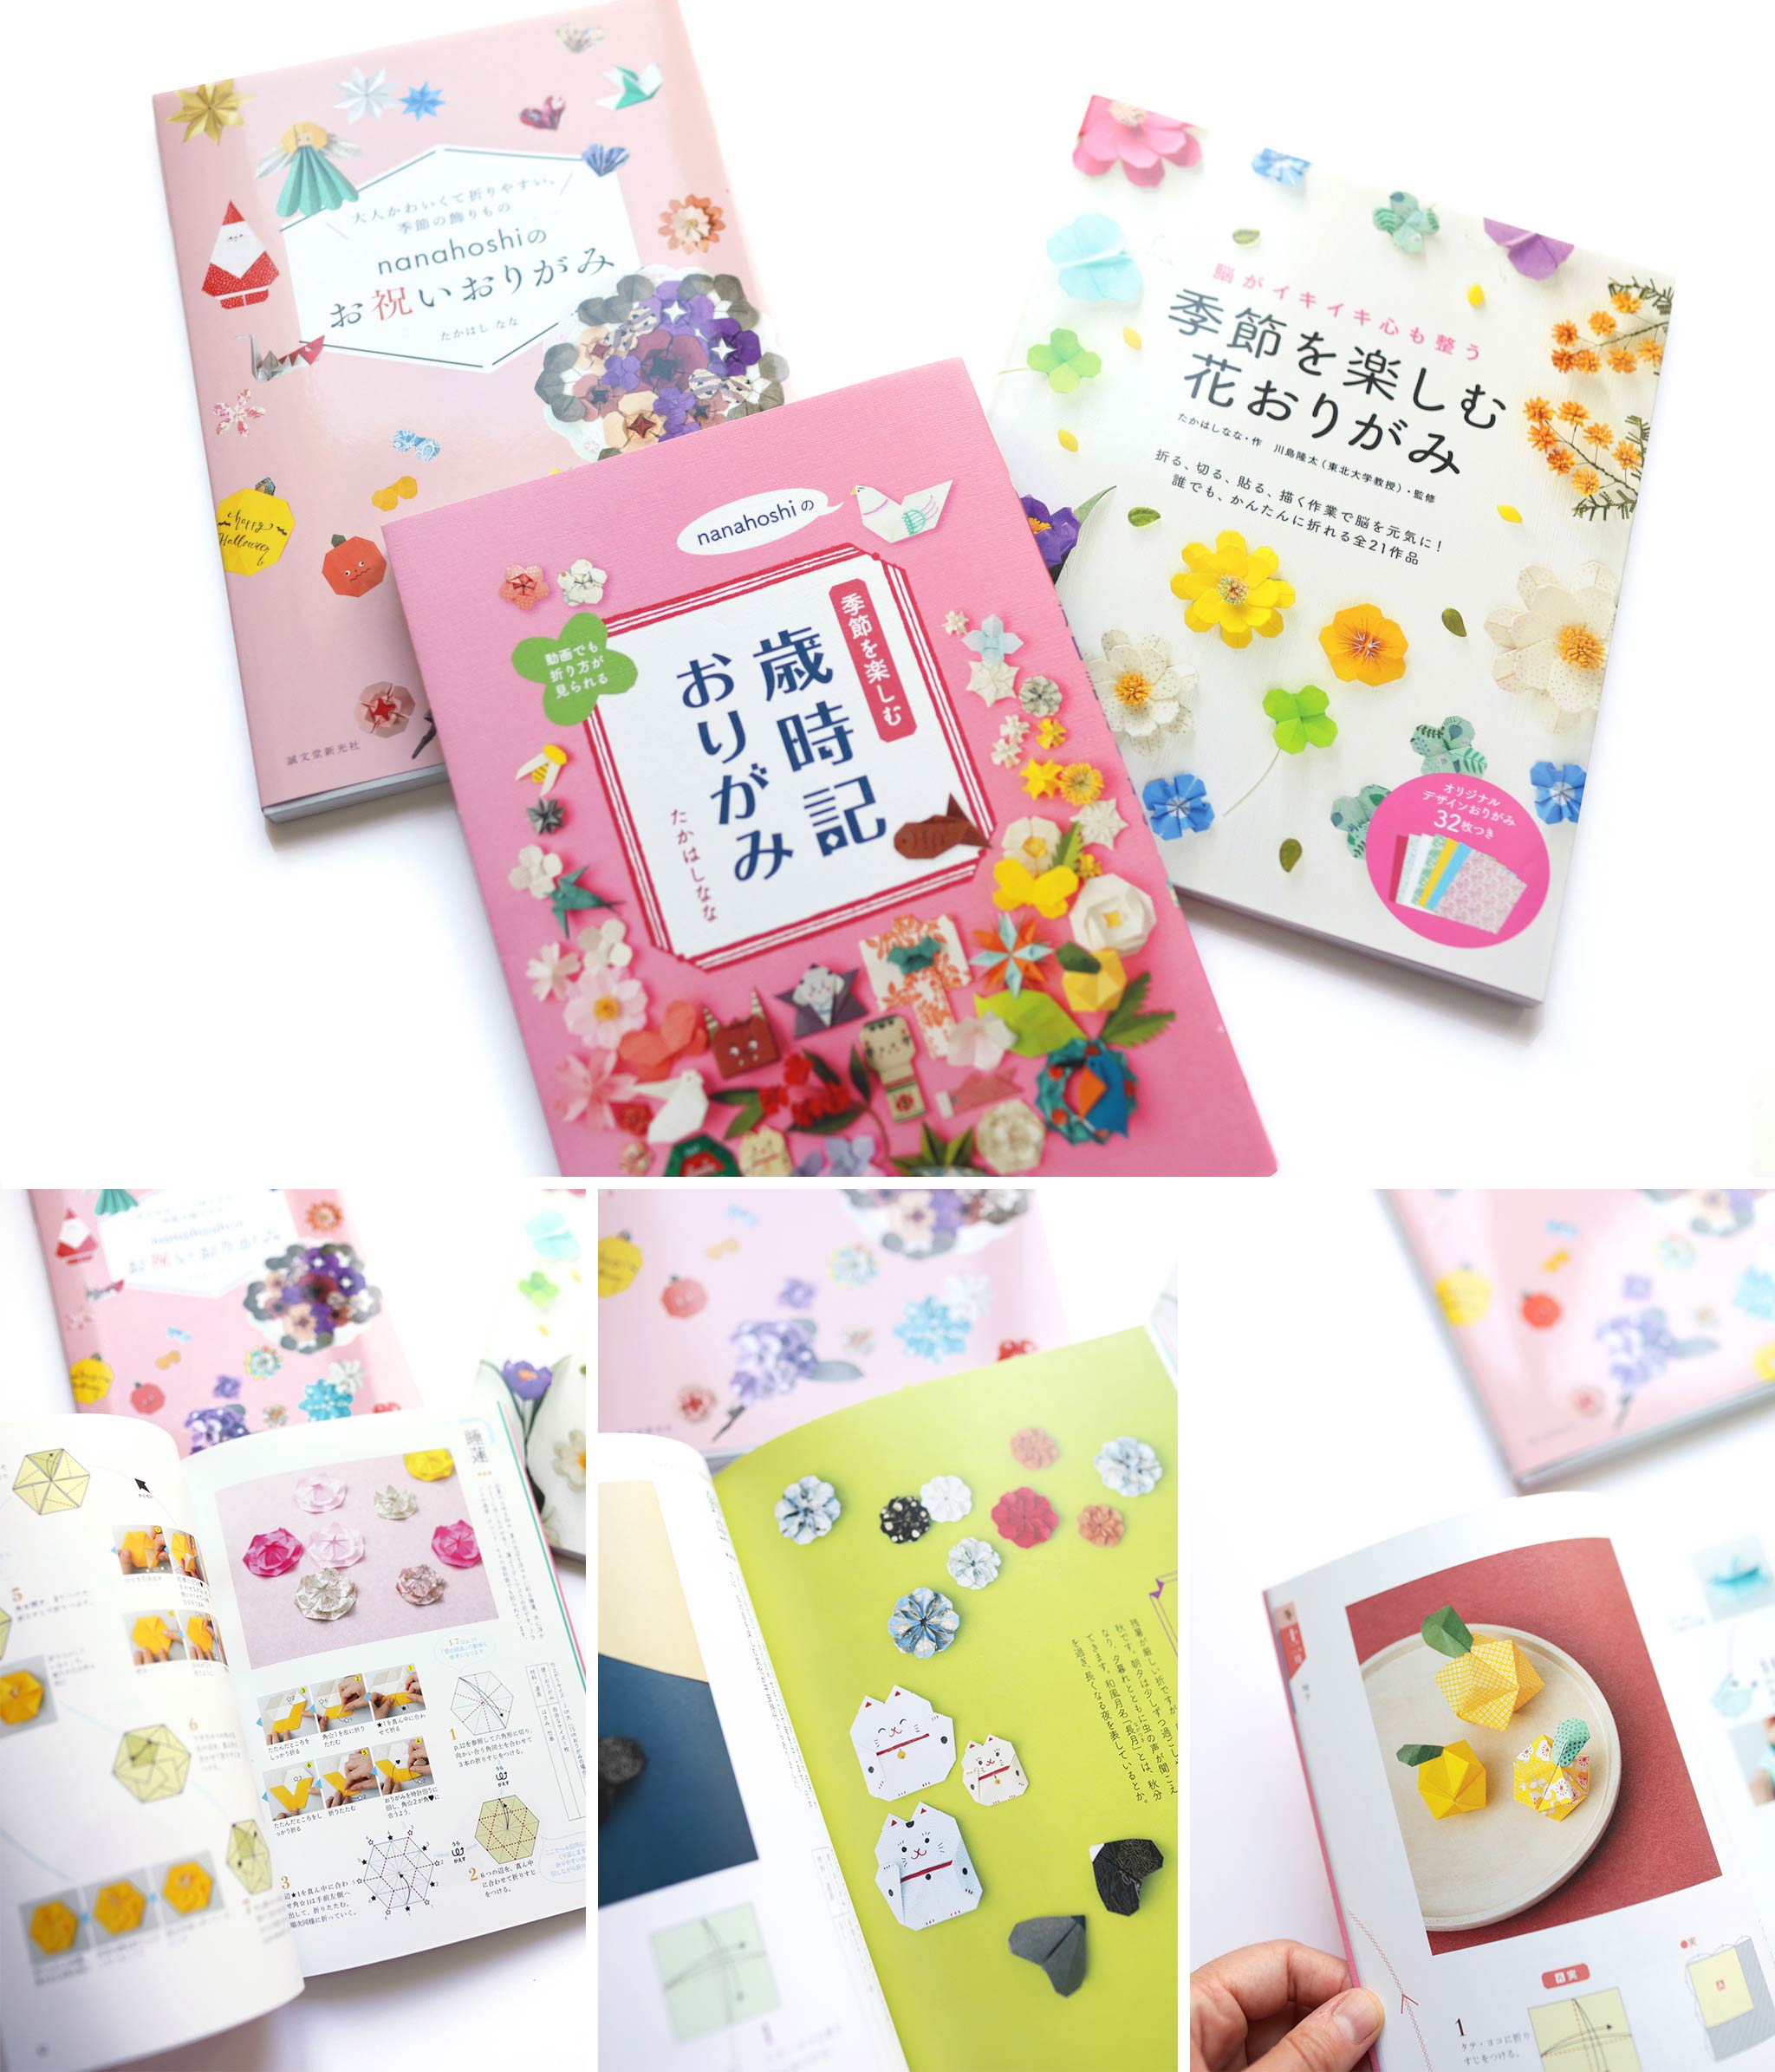 article-blog-nana-takahashi-adorables-origami-ambiance-5